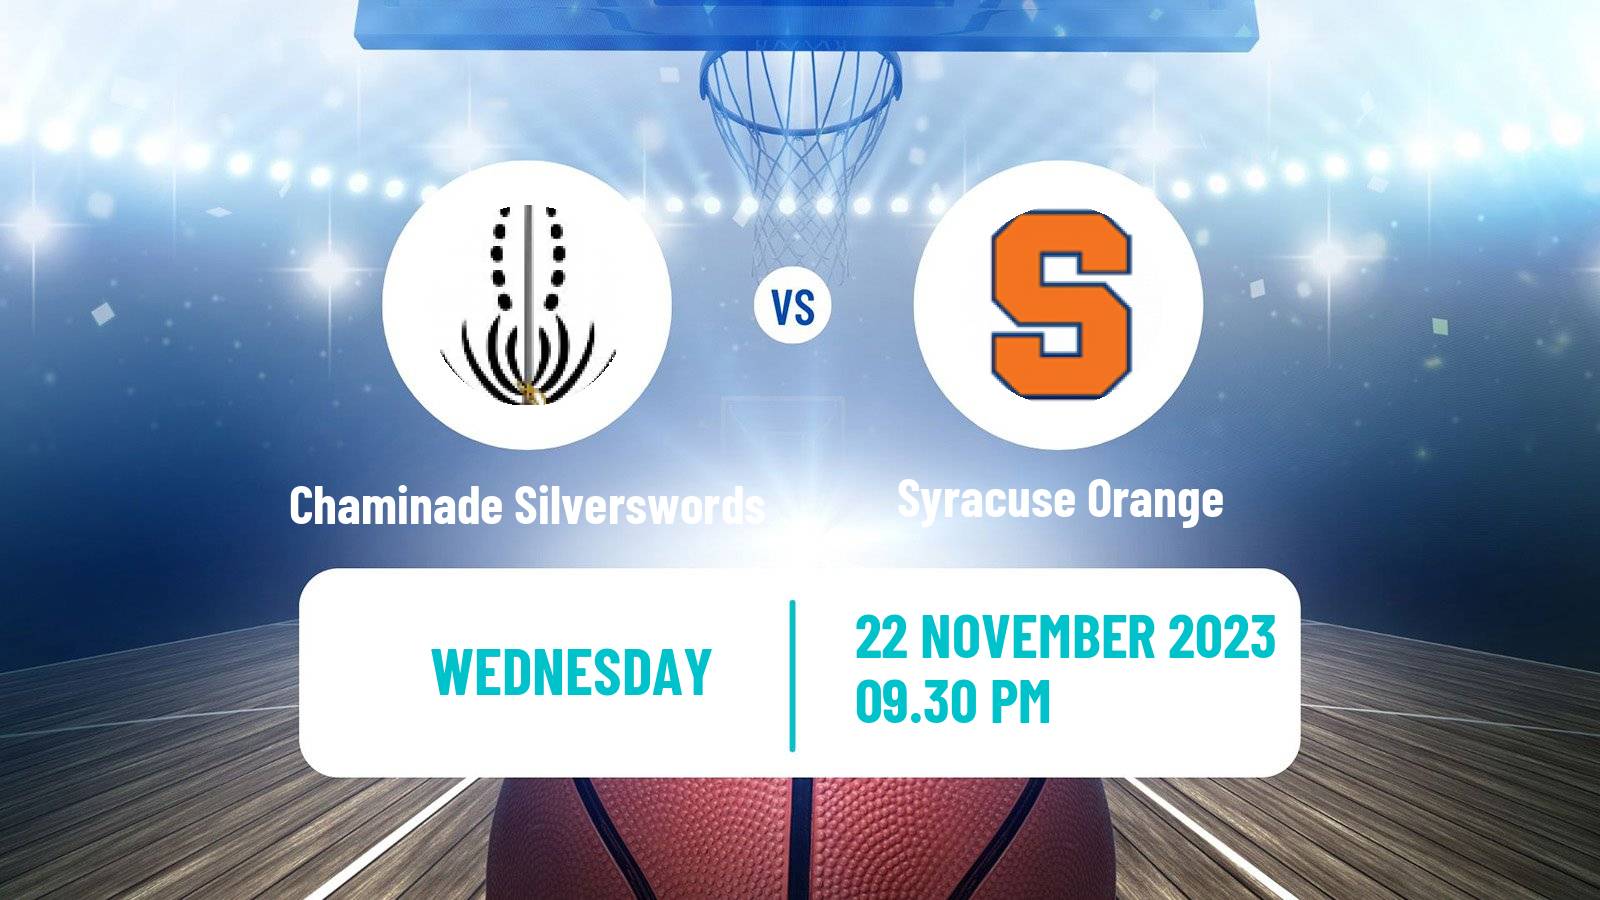 Basketball NCAA College Basketball Chaminade Silverswords - Syracuse Orange